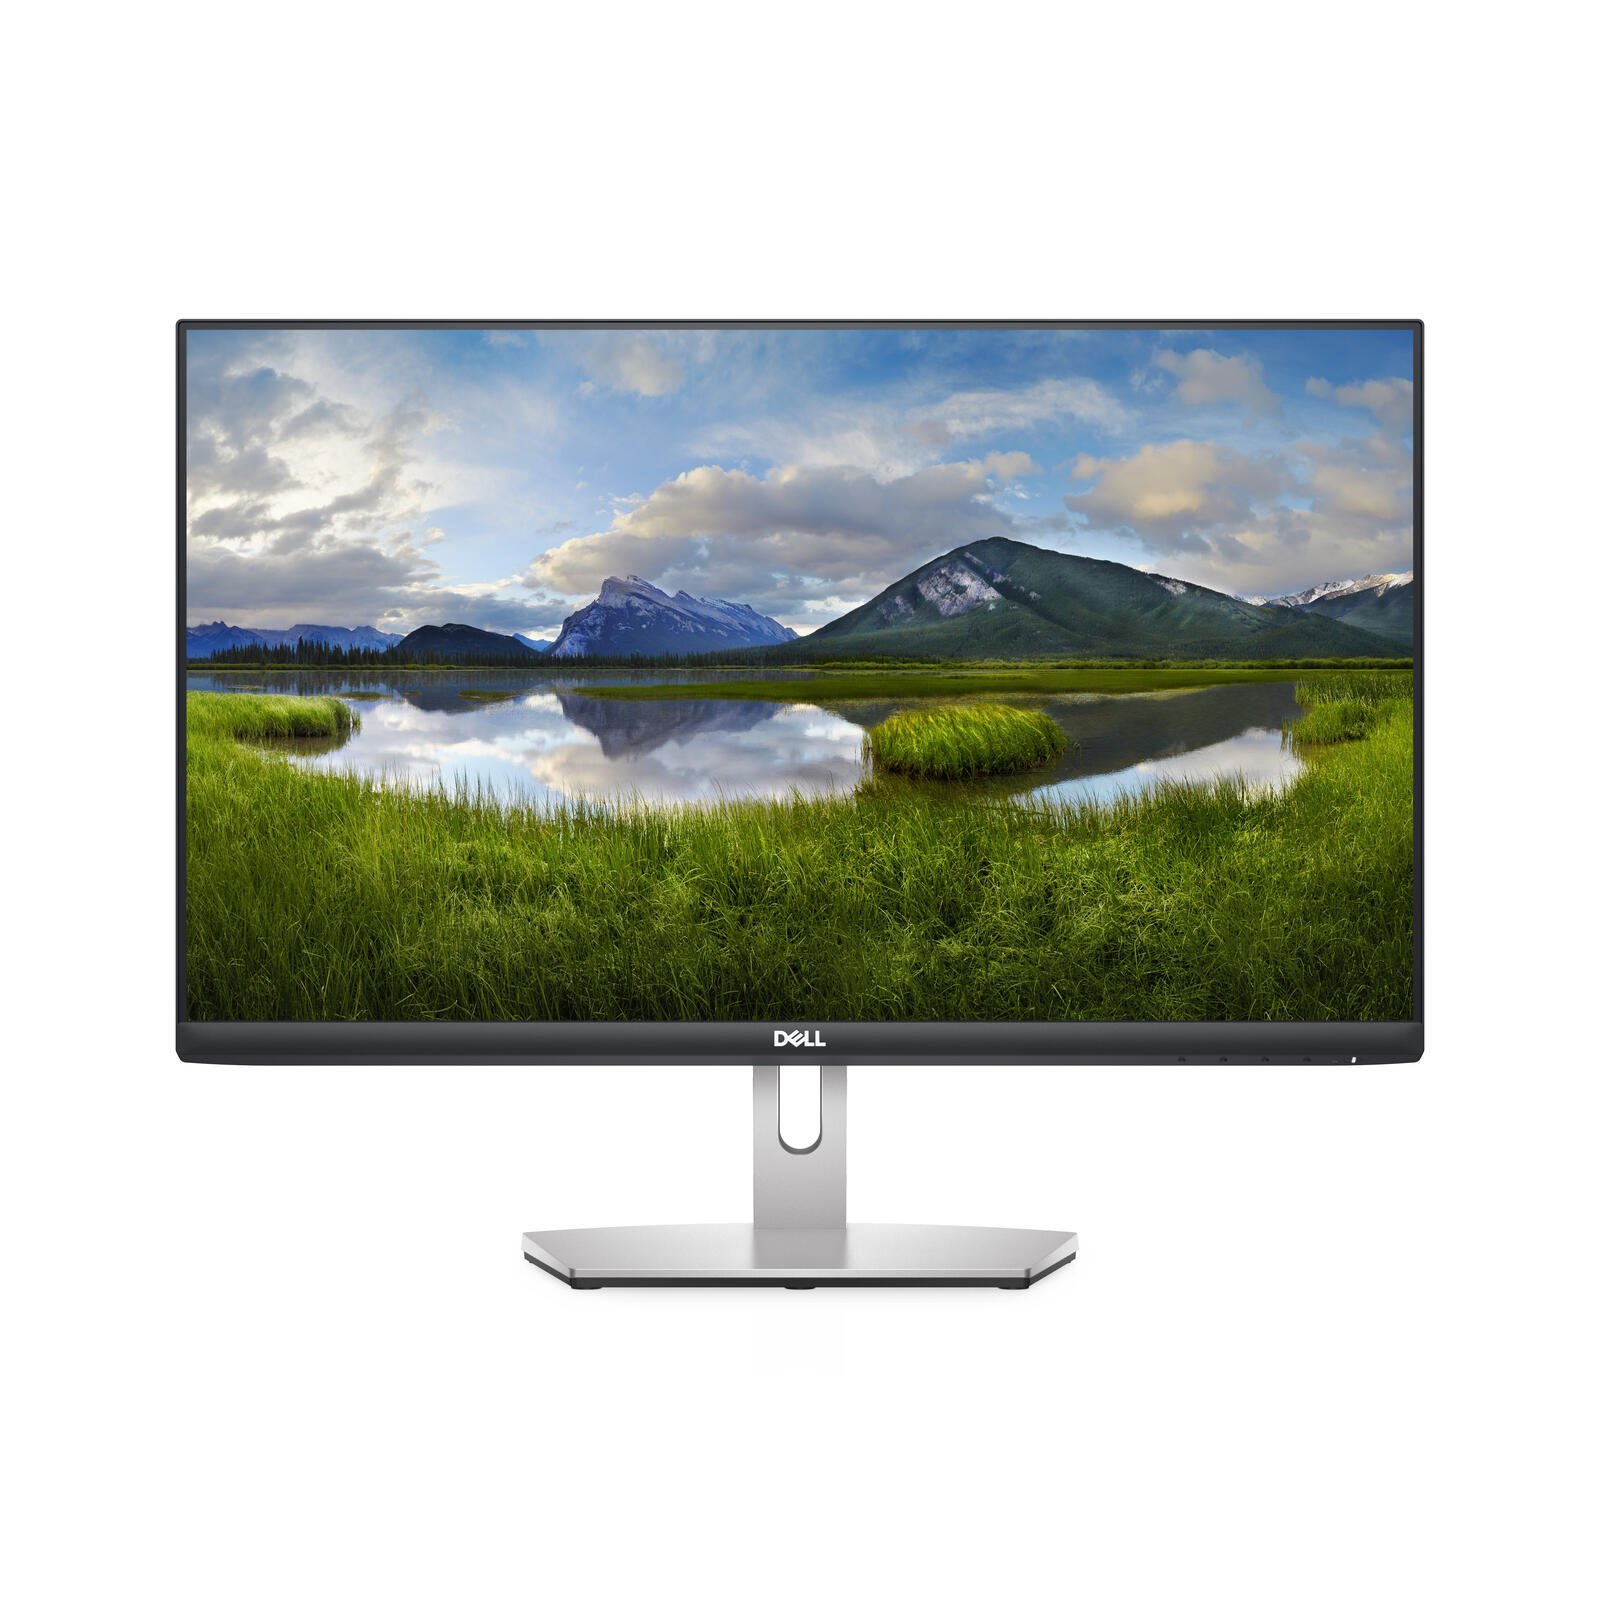 Dell LCD Monitor S2421HN 24 , IPS, FHD, 1920 x 1080, 16:9, 4 ms, 250 cd/m², Silver monitors